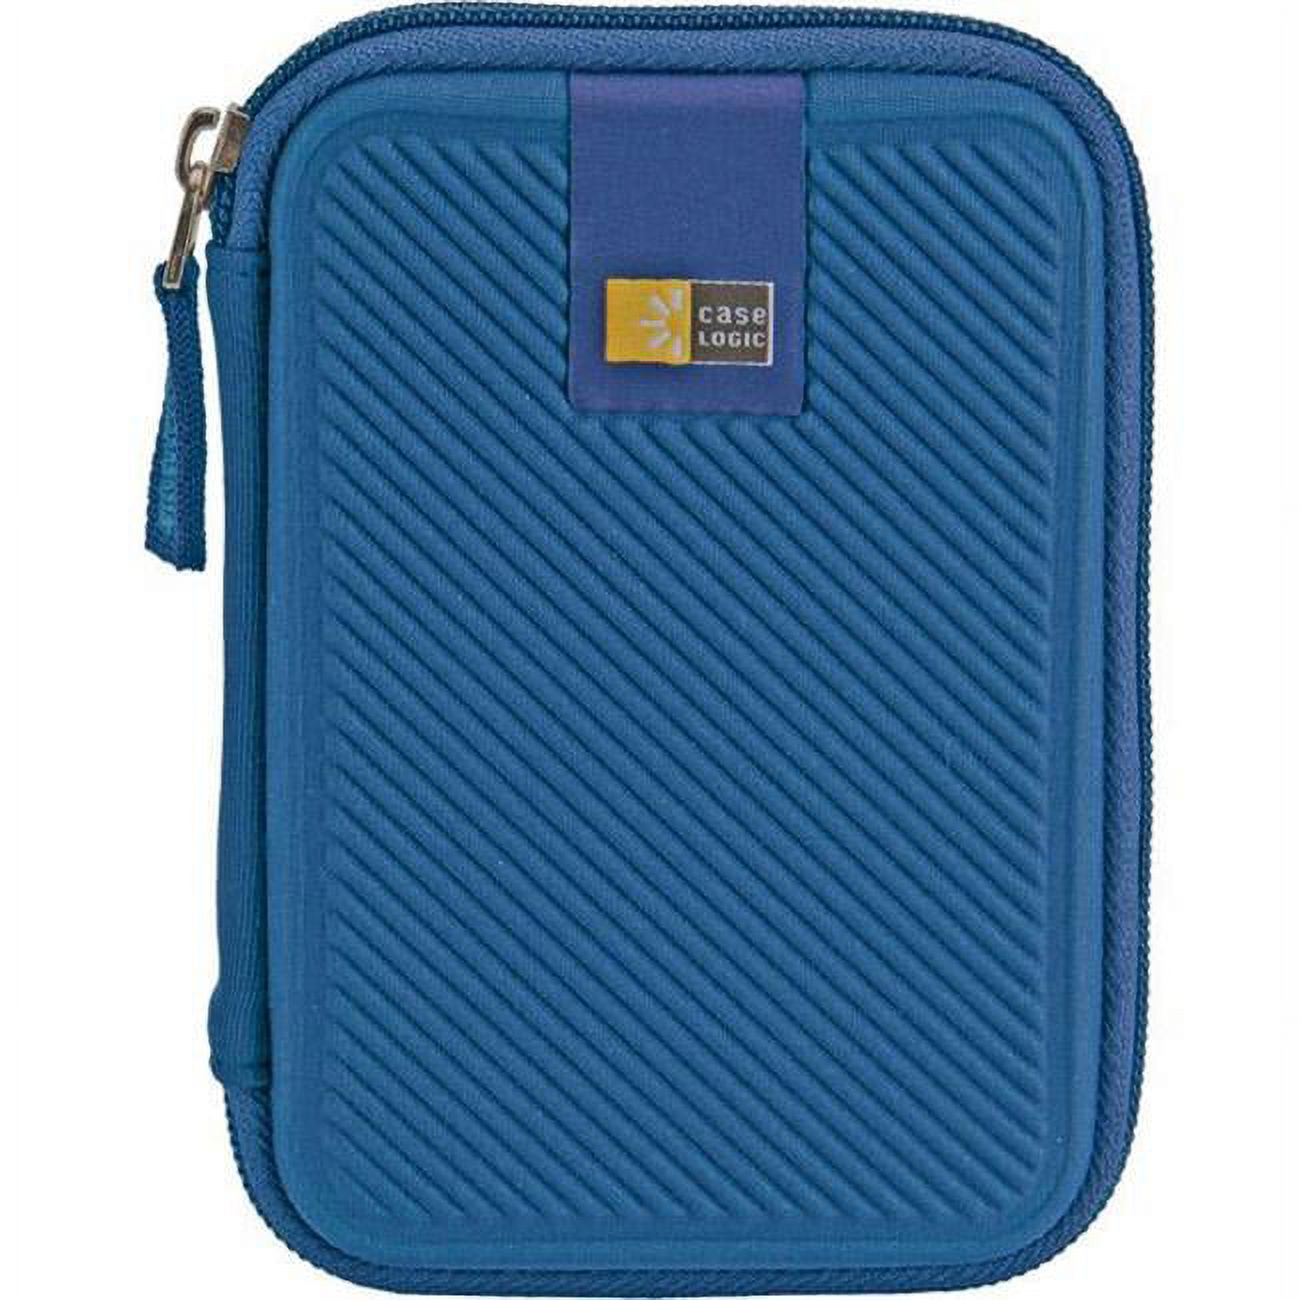 Case Logic Dark Blue Portable Hard Drive Case - image 1 of 1